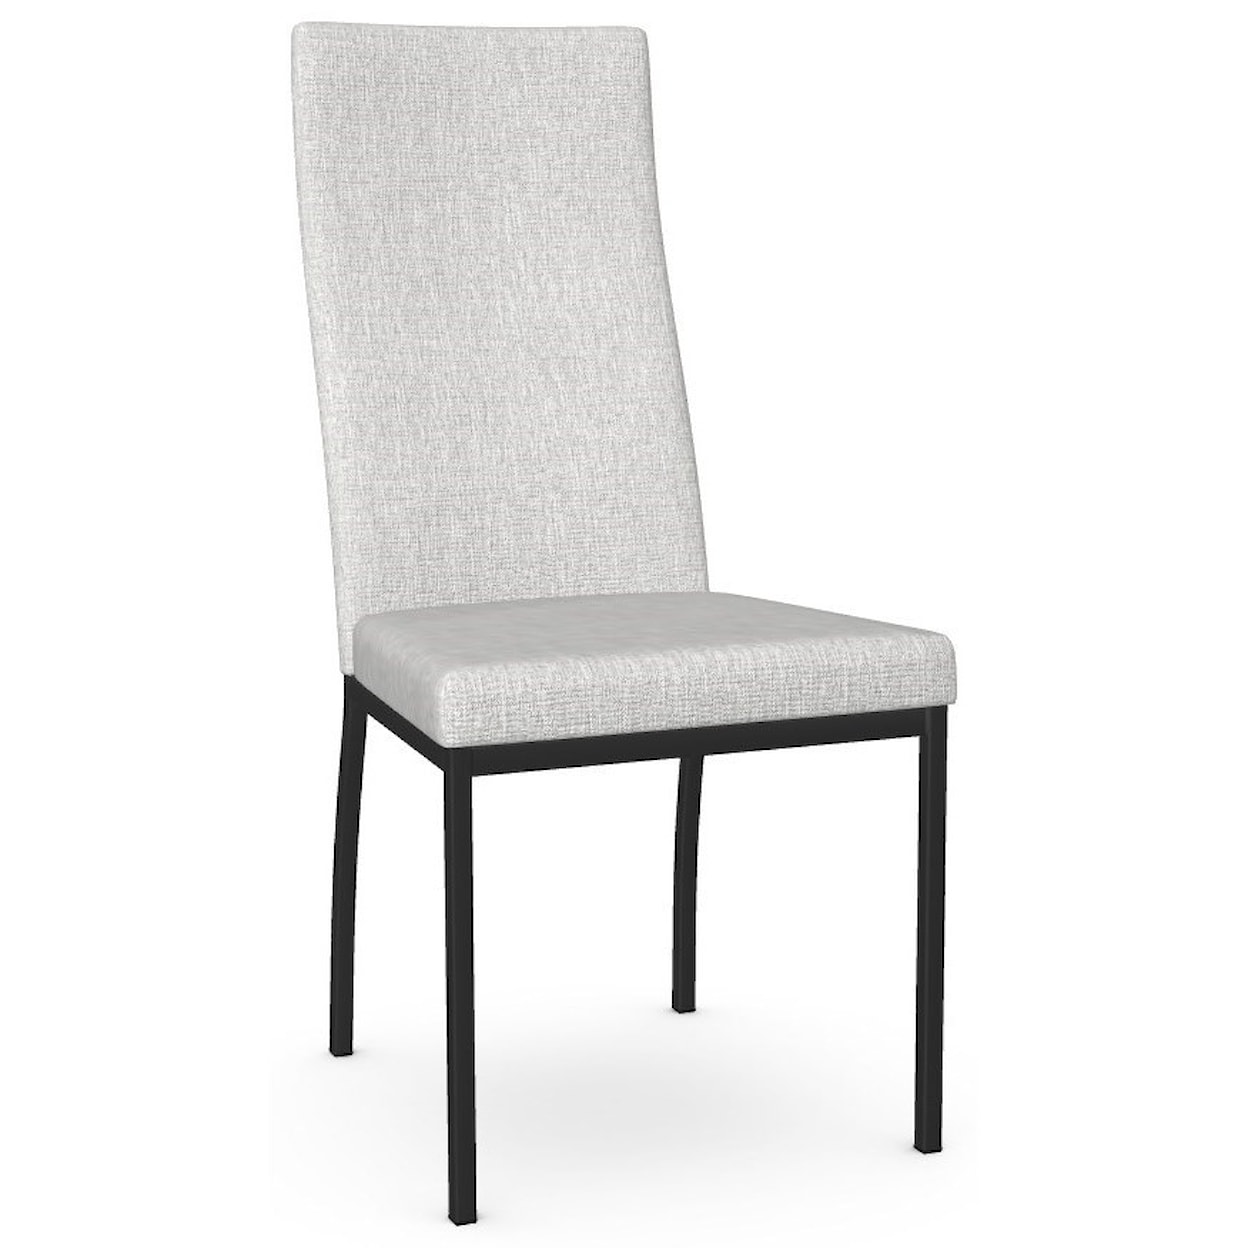 Amisco Urban Curve Side Chair